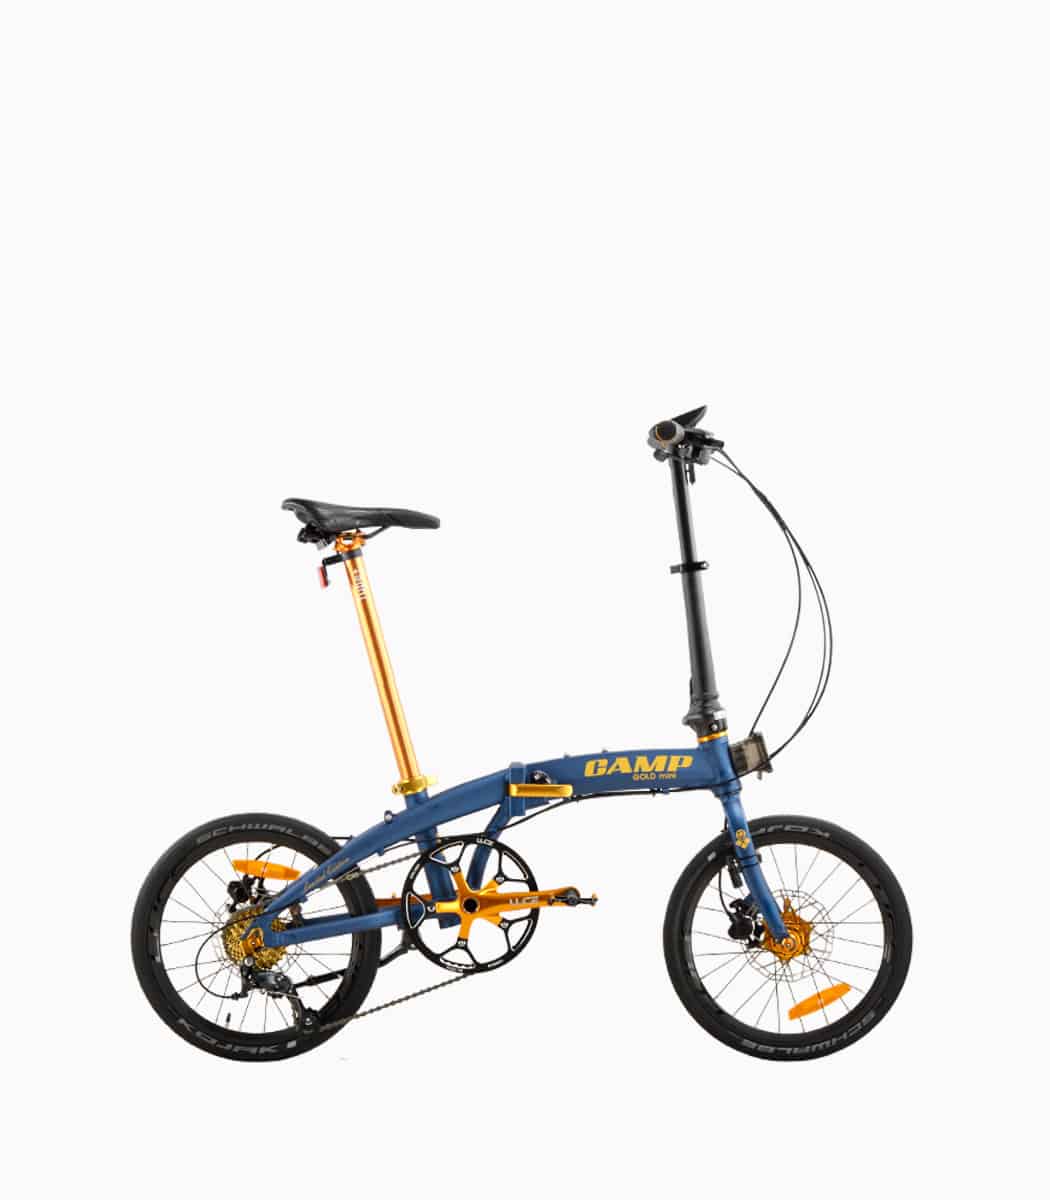 CAMP Gold Mini Sport (MATT BLUE) foldable bicycle right